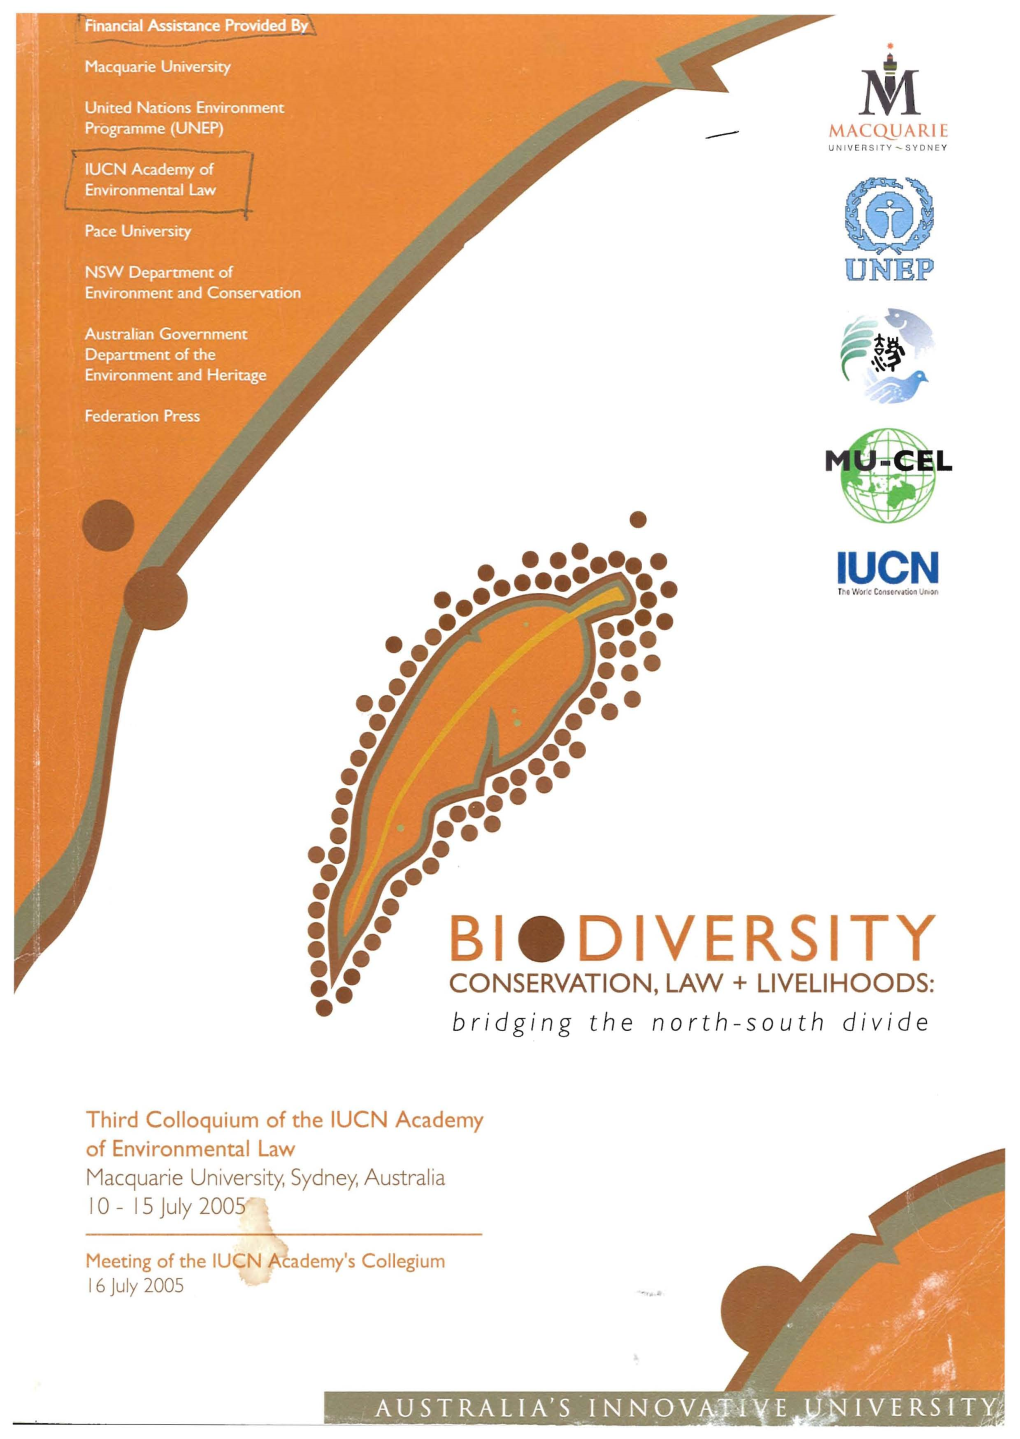 Third Colloquium of the IUCN Academy of Environmental Law Macquarie University, Sydney,Australia 10 - I5 July 2005